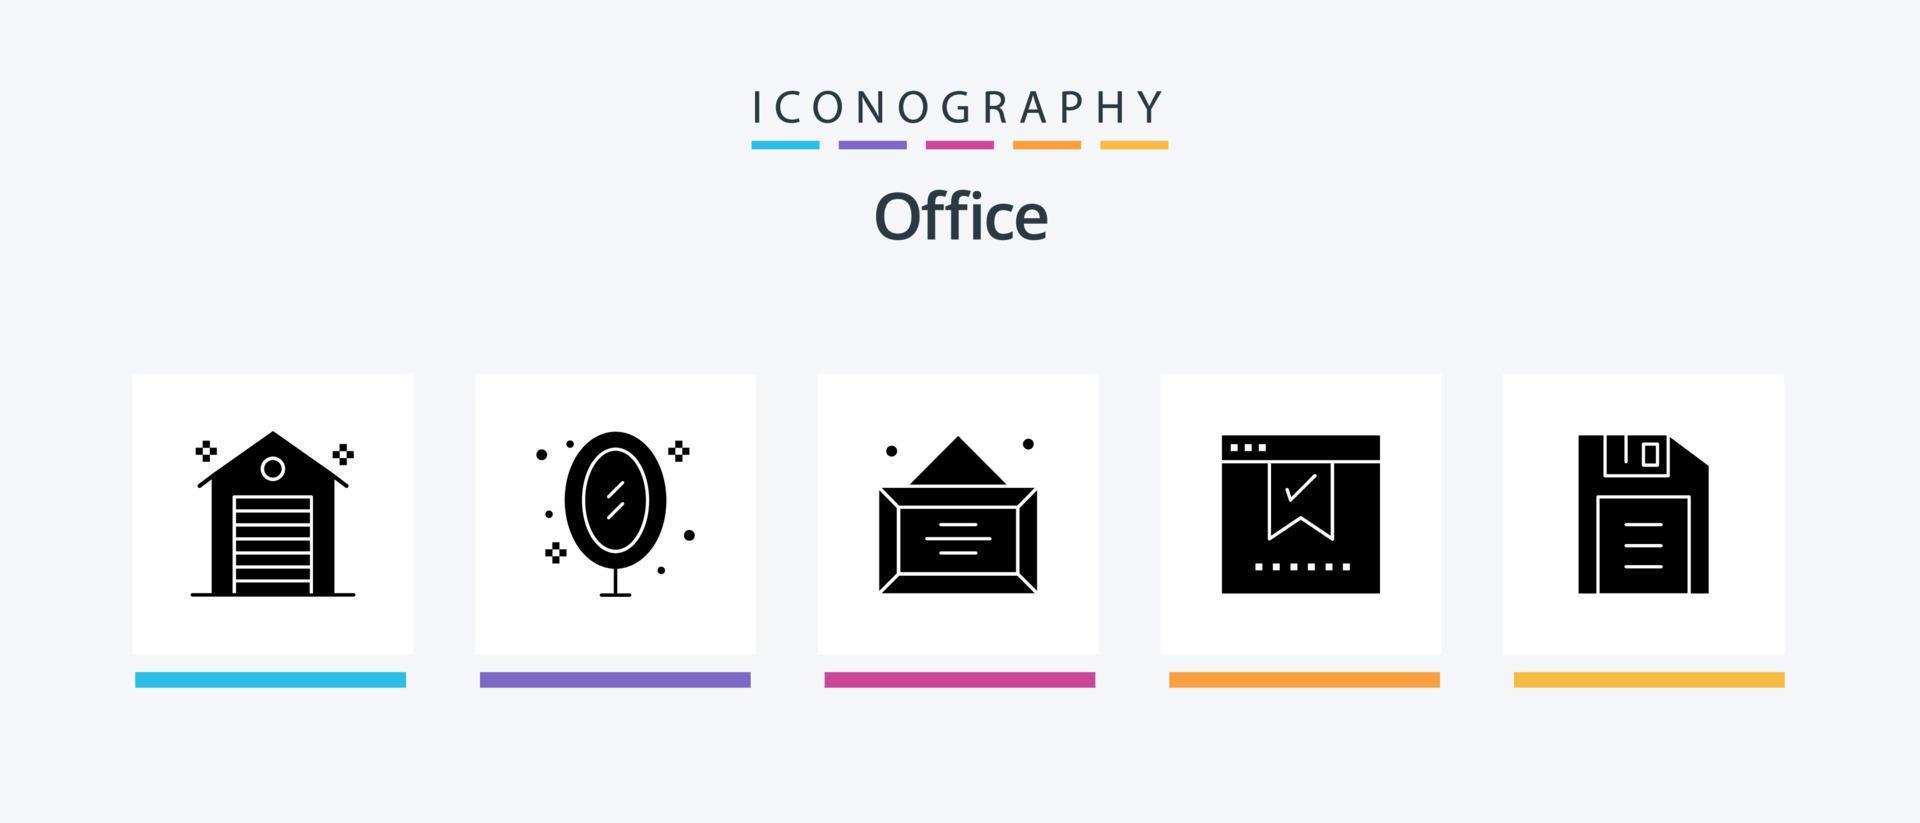 paquete de iconos de Office glyph 5 que incluye OK. bueno. reflexión. controlar. oficina. diseño de iconos creativos vector